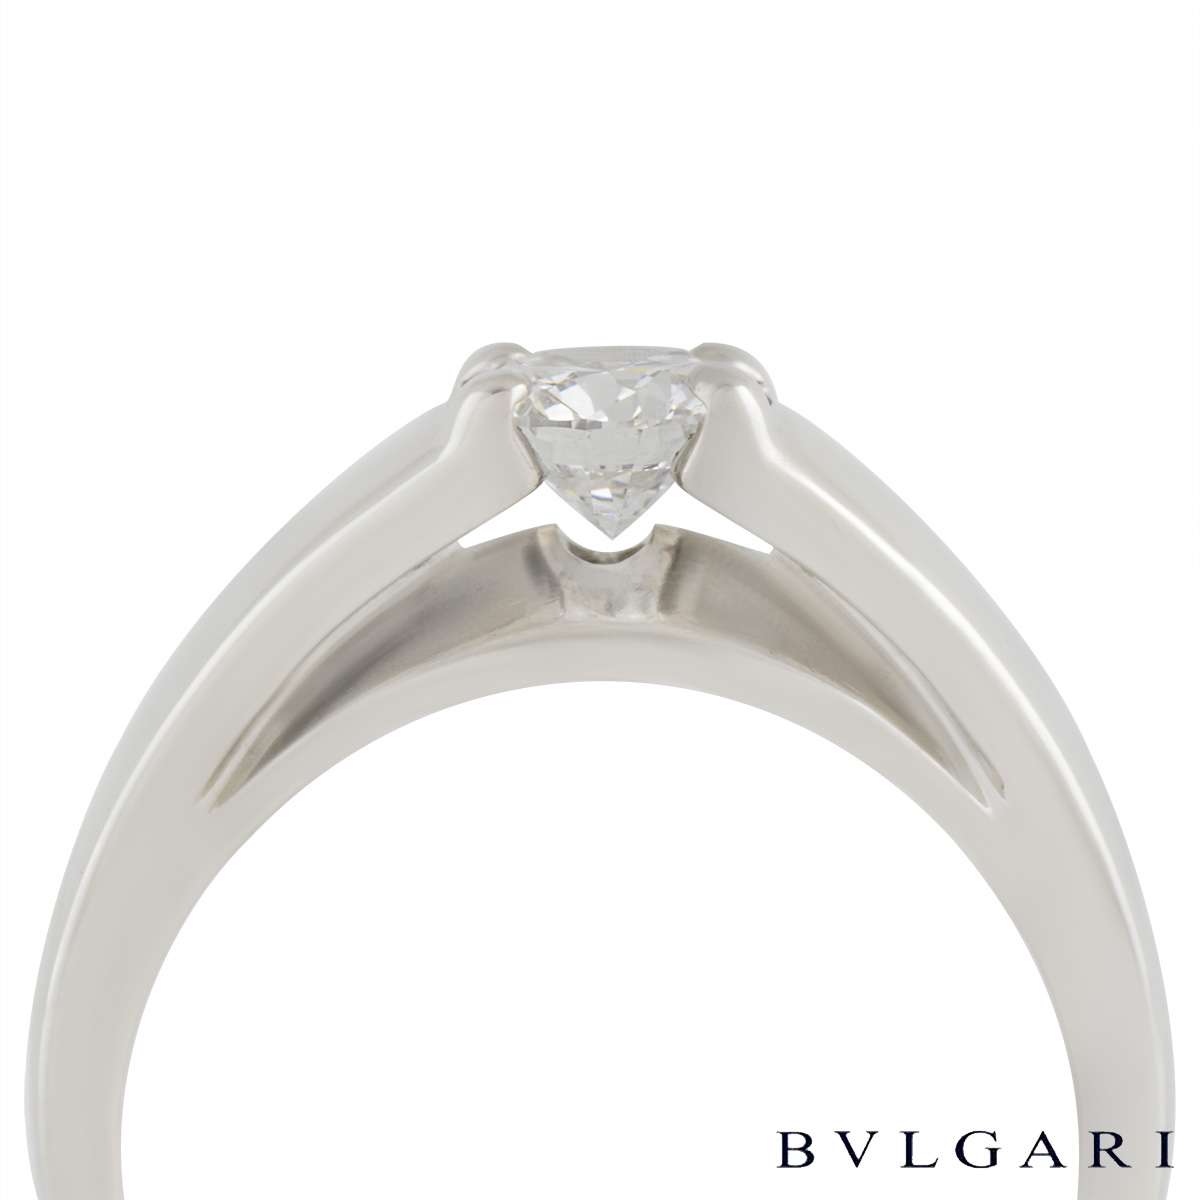 Bvlgari Round Brilliant Cut Diamond 